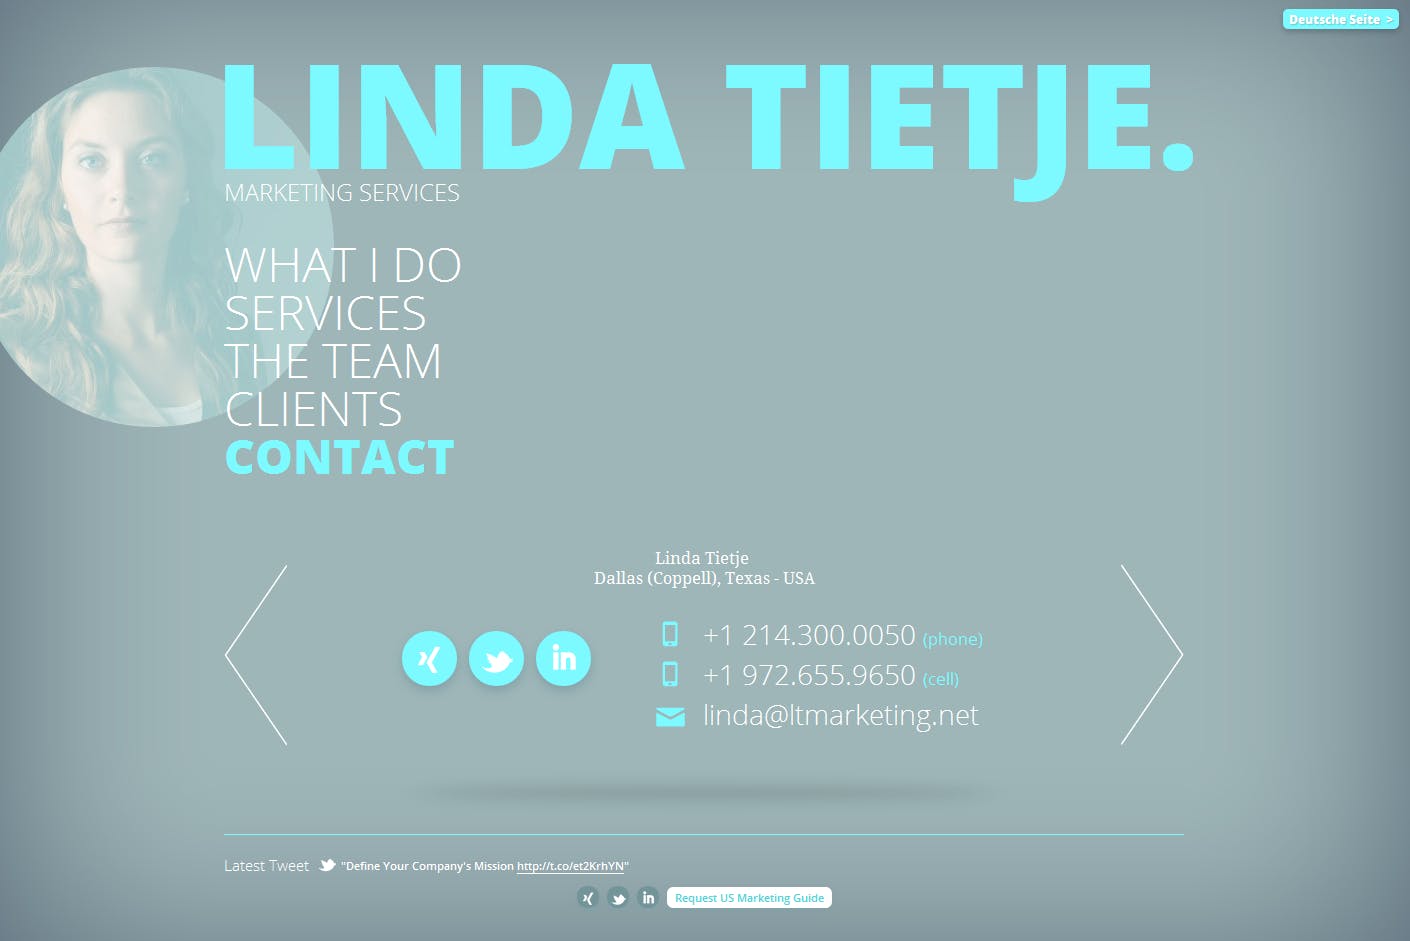 Linda Tietje. Marketing Services. Website Screenshot